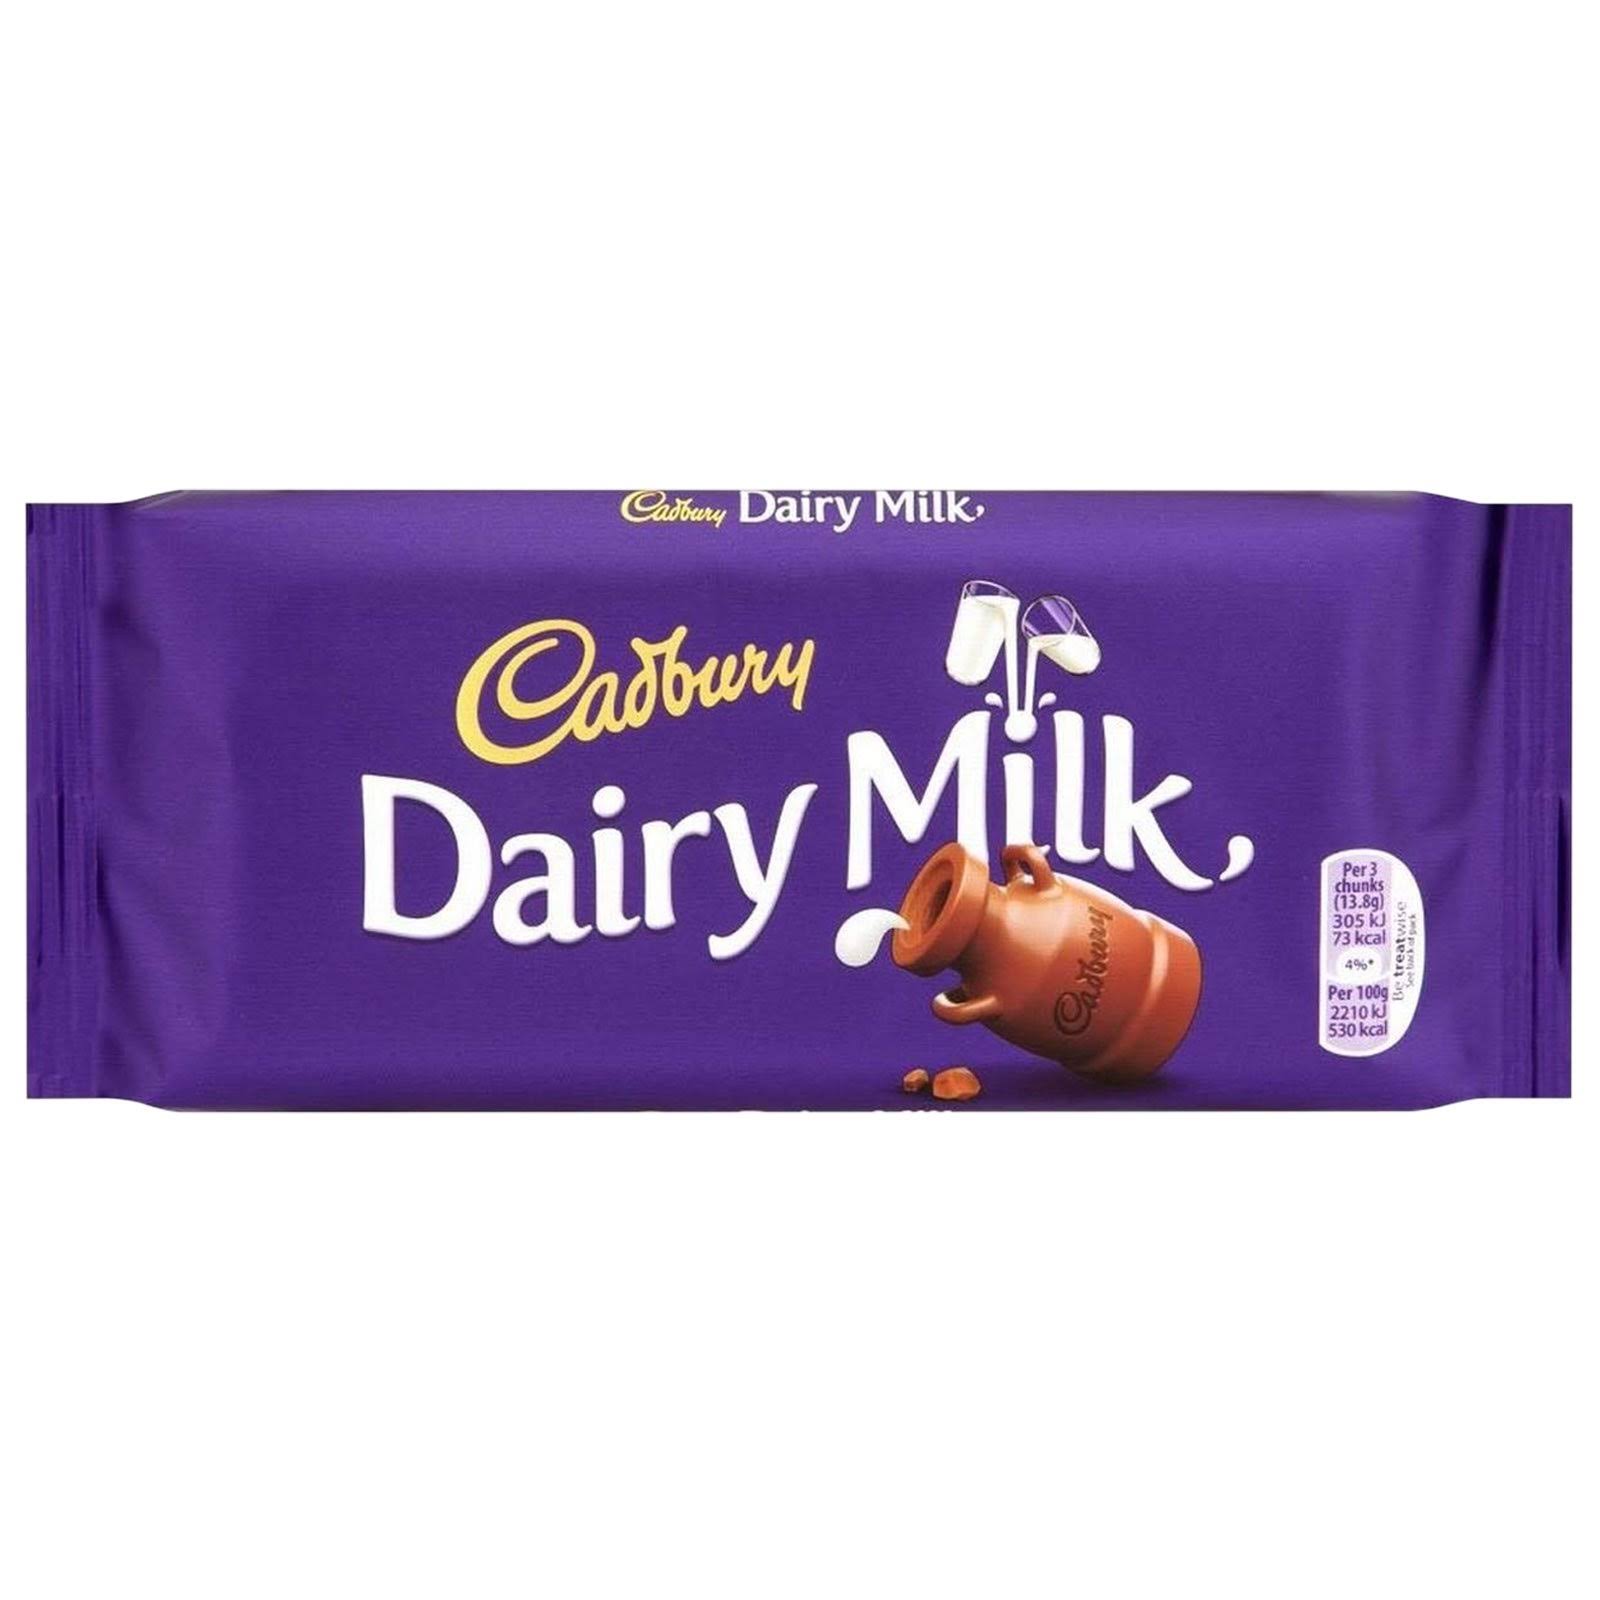 Cadbury Dairy Milk Chocolate Bar 110g